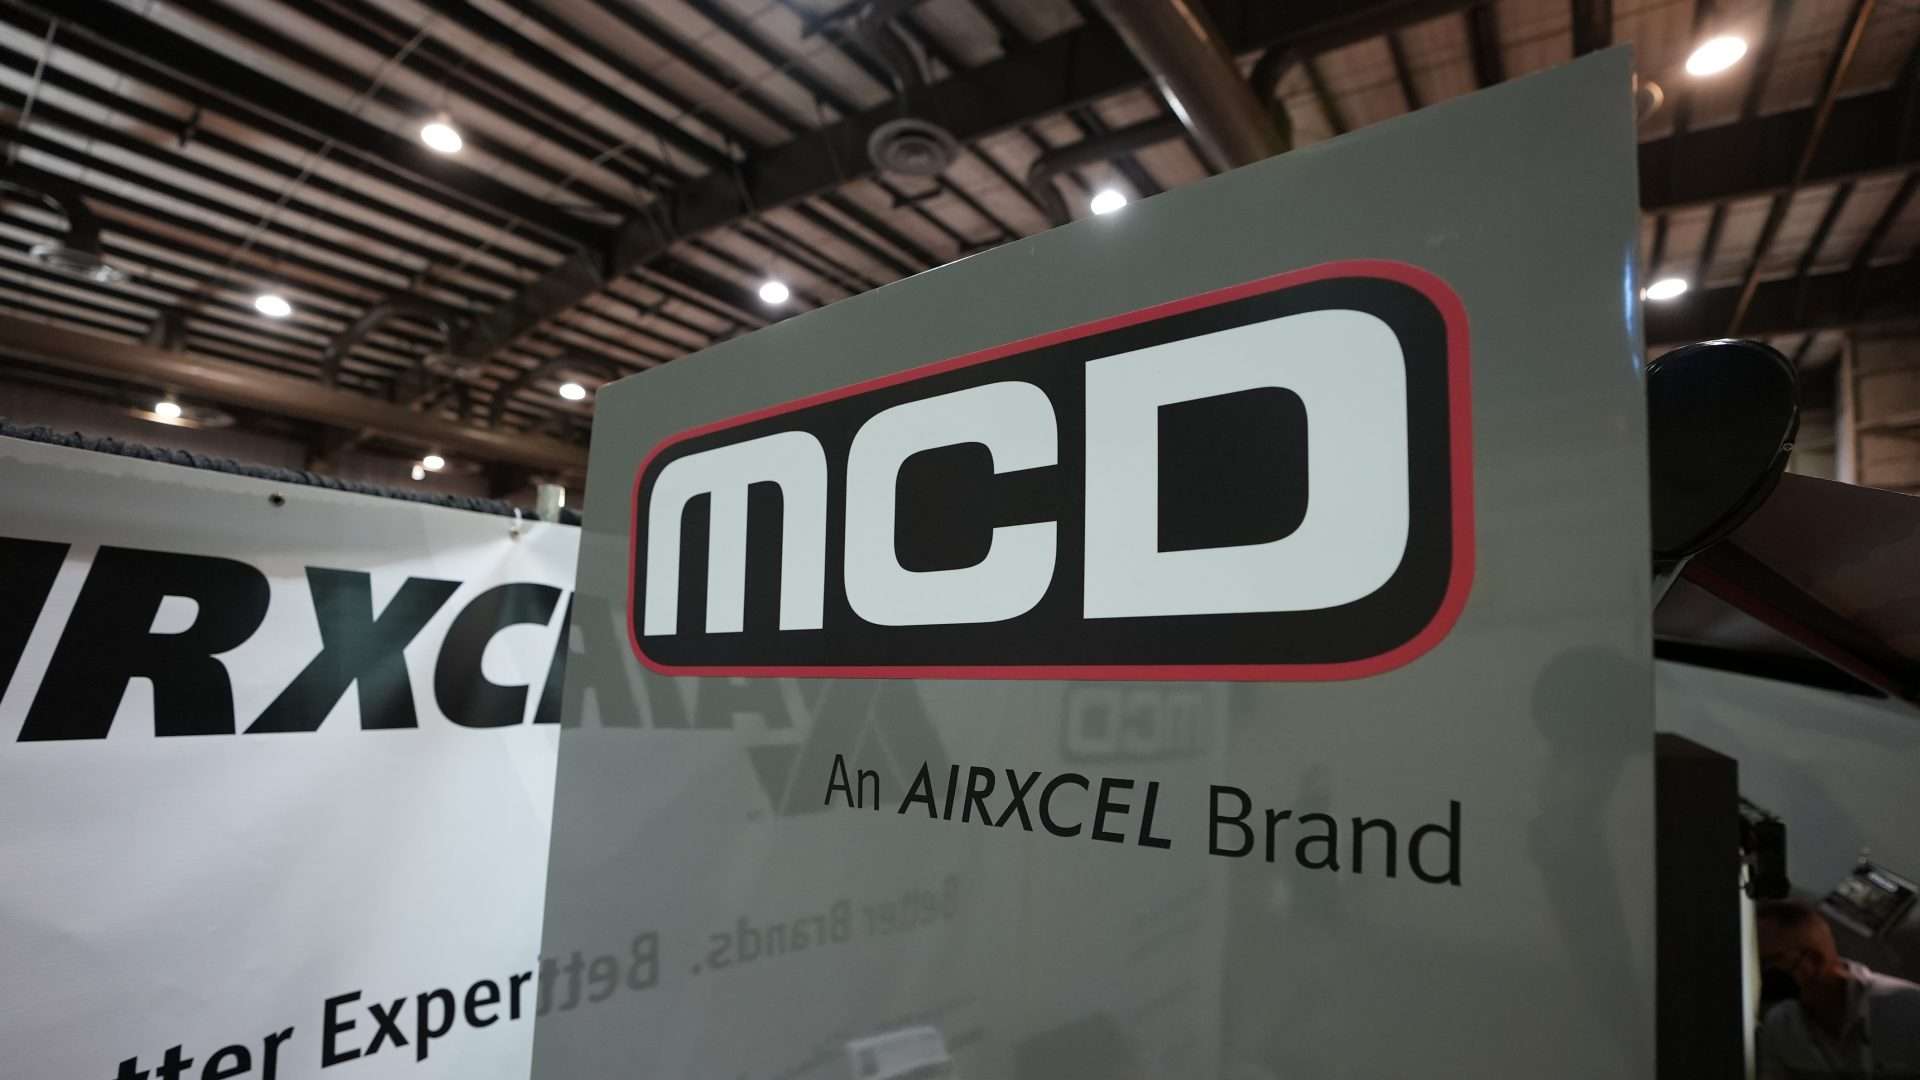 MCD by Airxcel logo